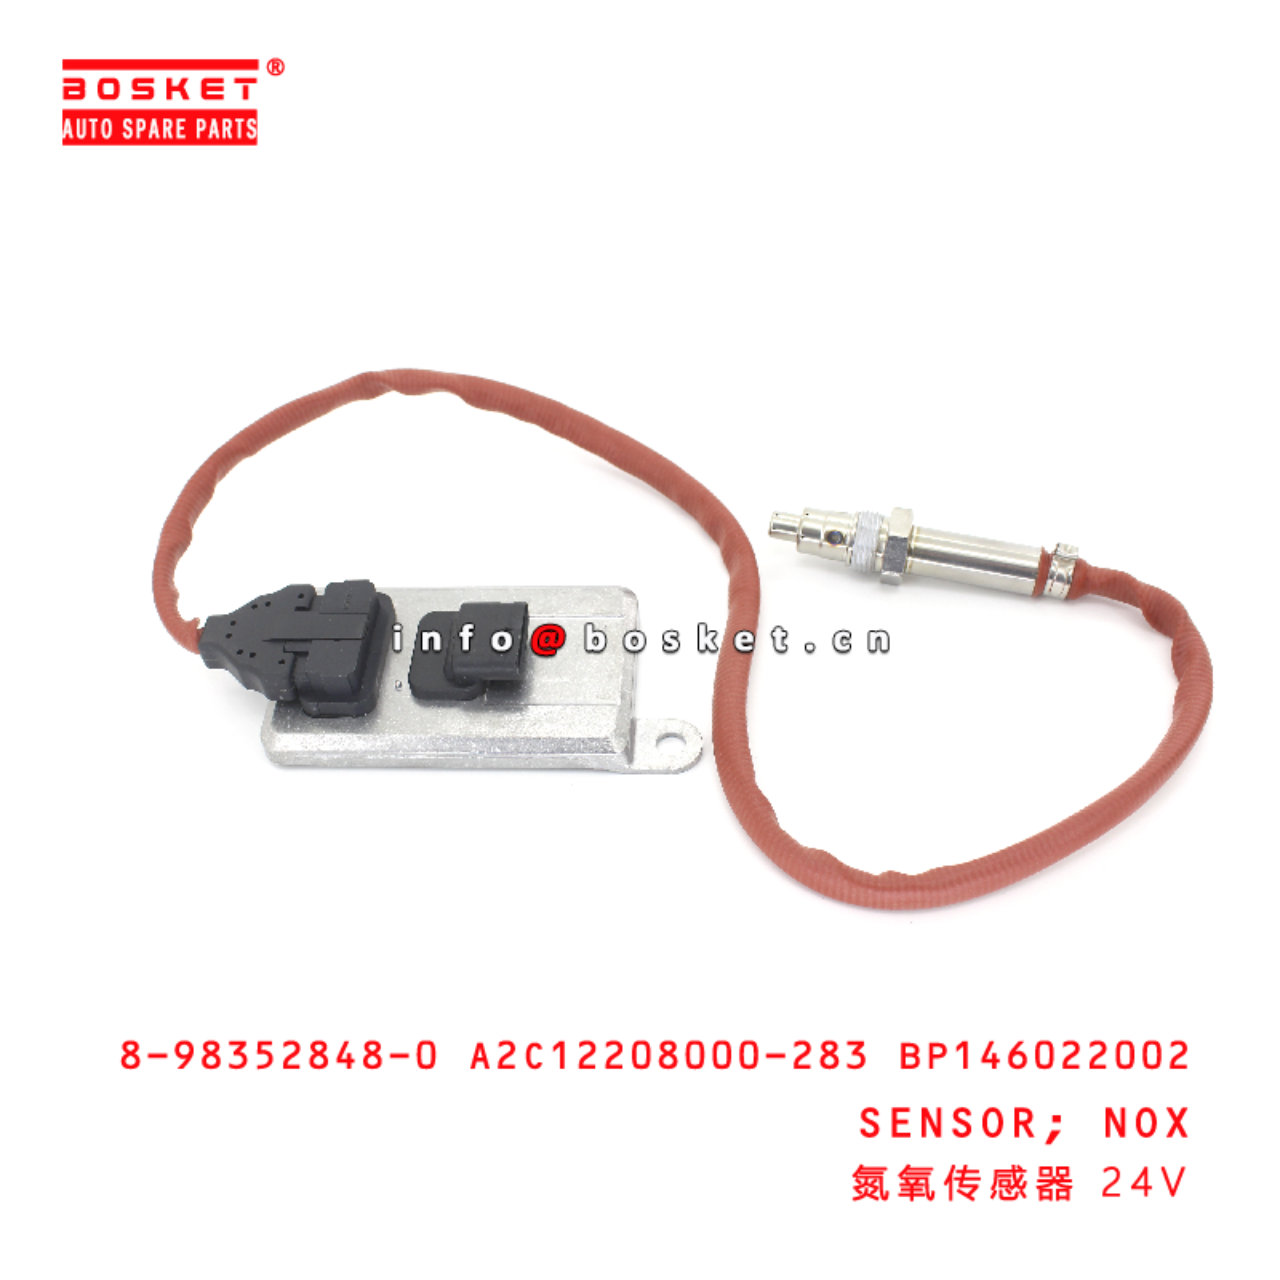 8-98352848-0 A2C12208000-283 BP146022002 Nox Sensor suitable for ISUZU 8983528480